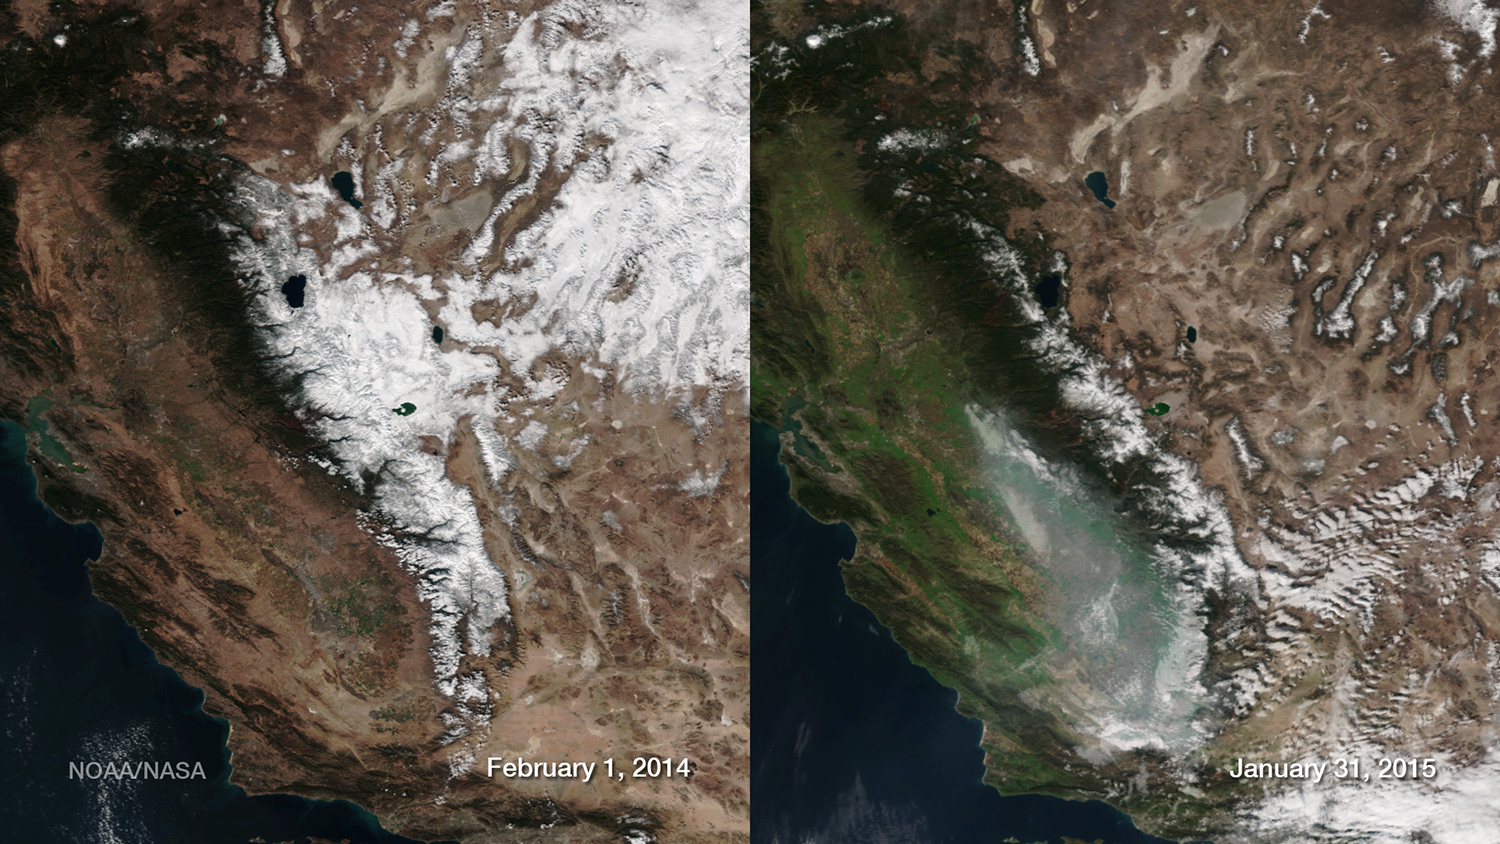 Sierra Nevada Snowpack Comparison 2014 - 2015